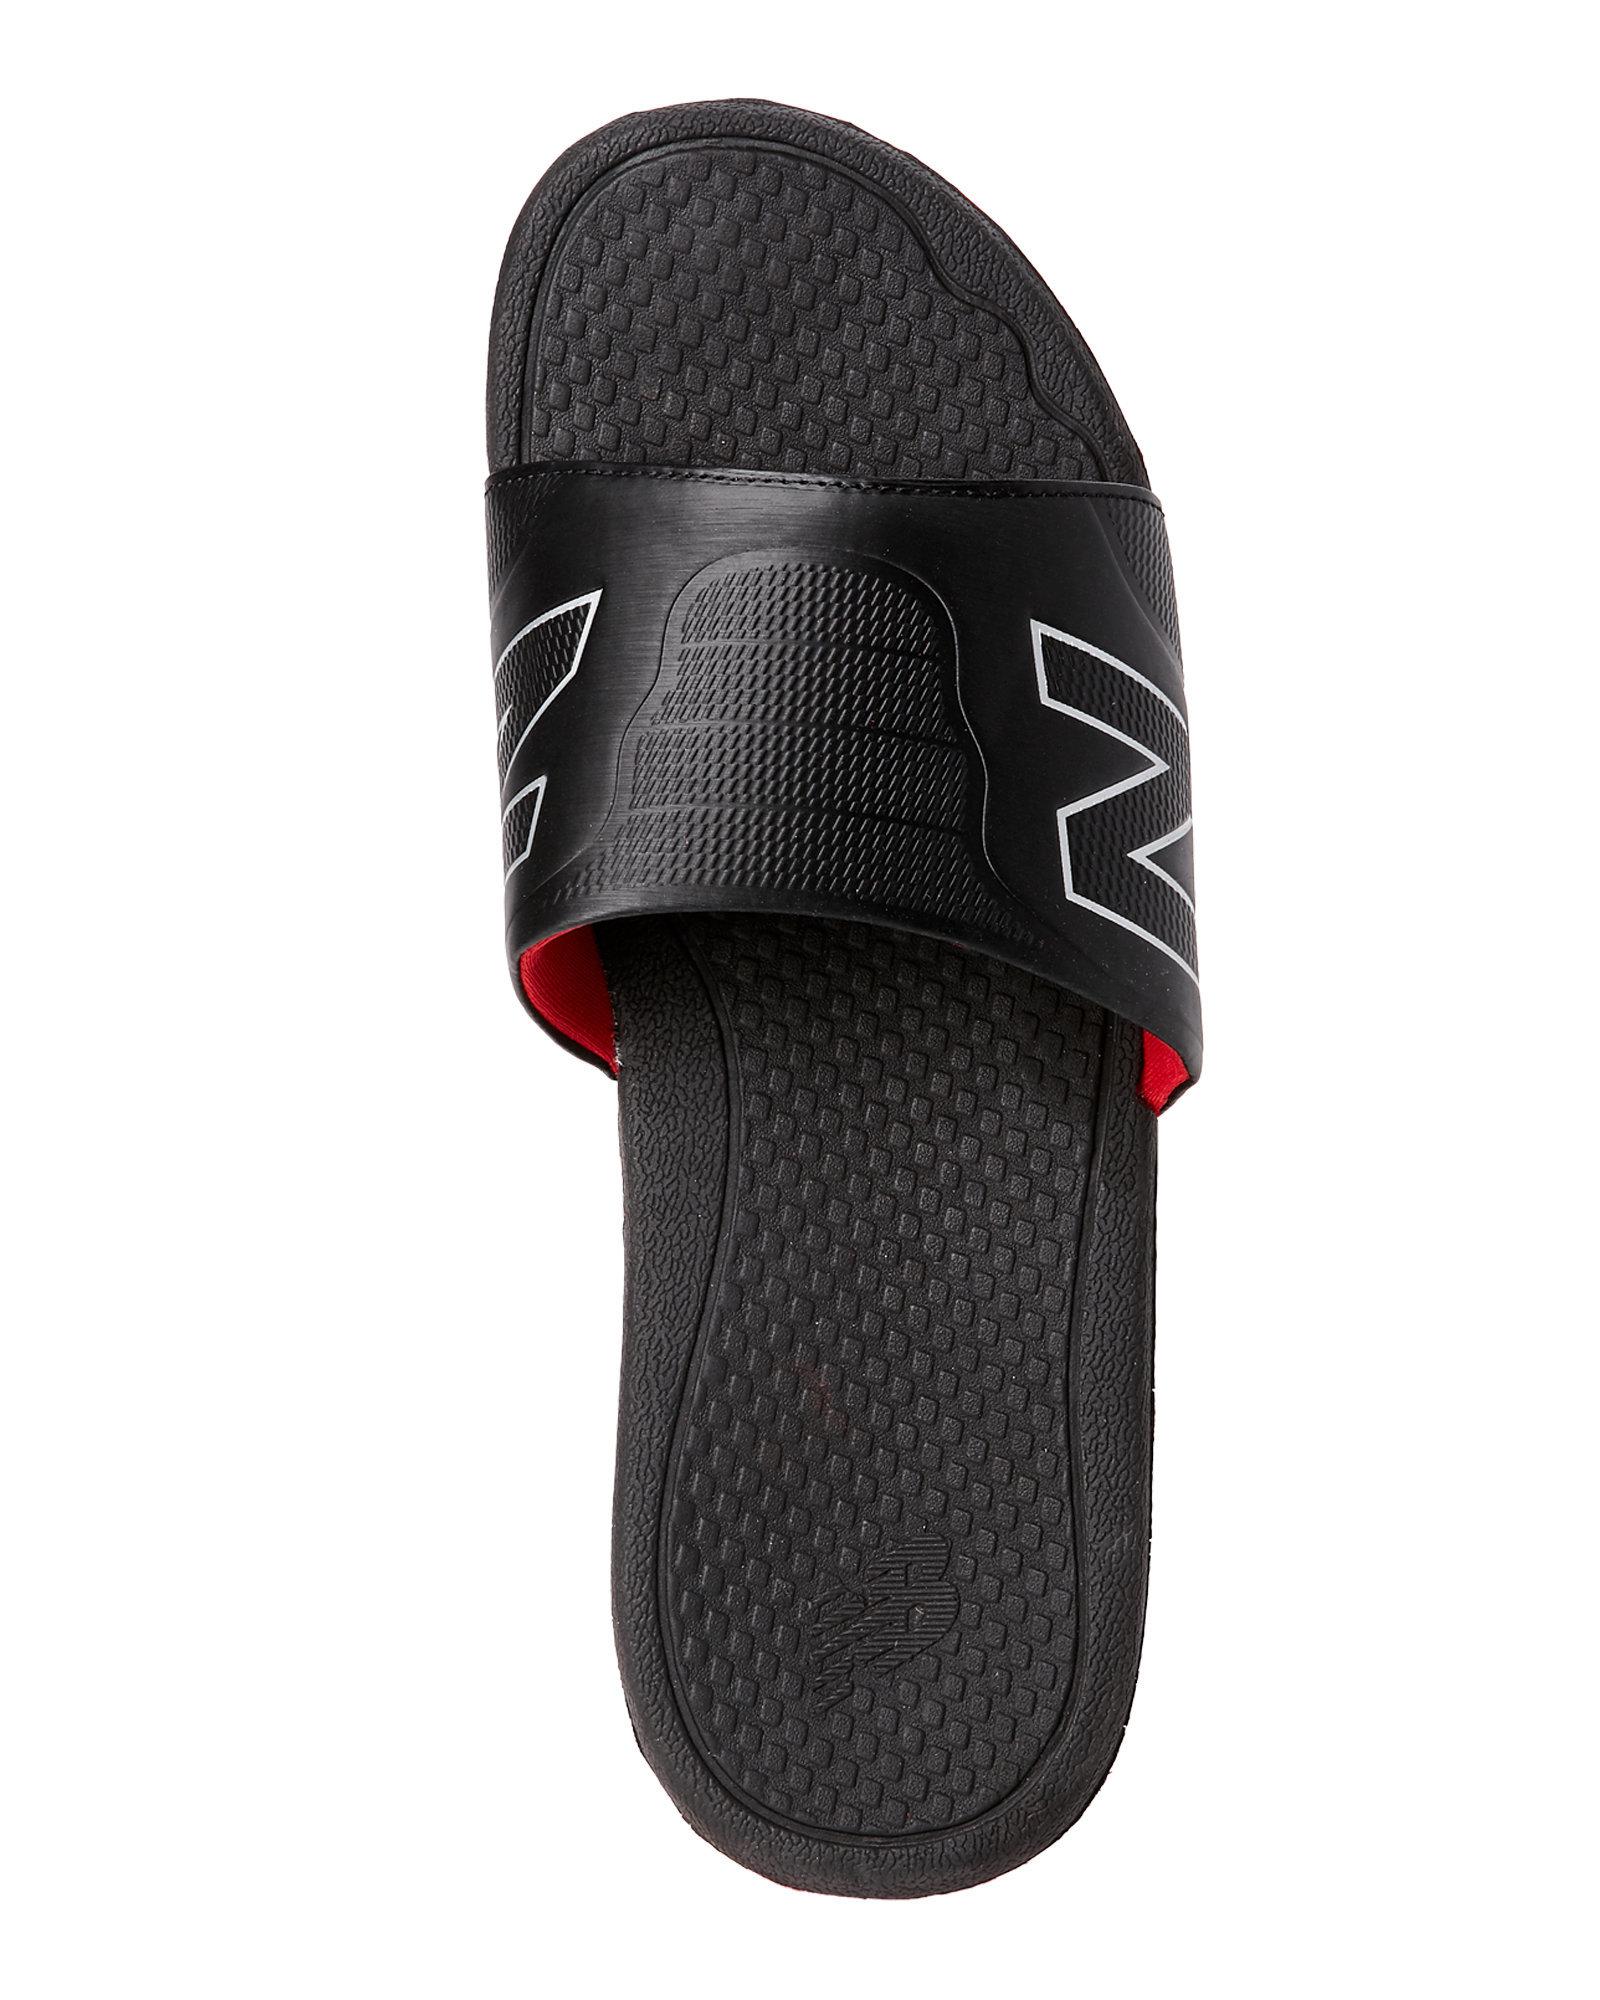 New Balance Black & Red Pro Slide Sandals for Men - Lyst